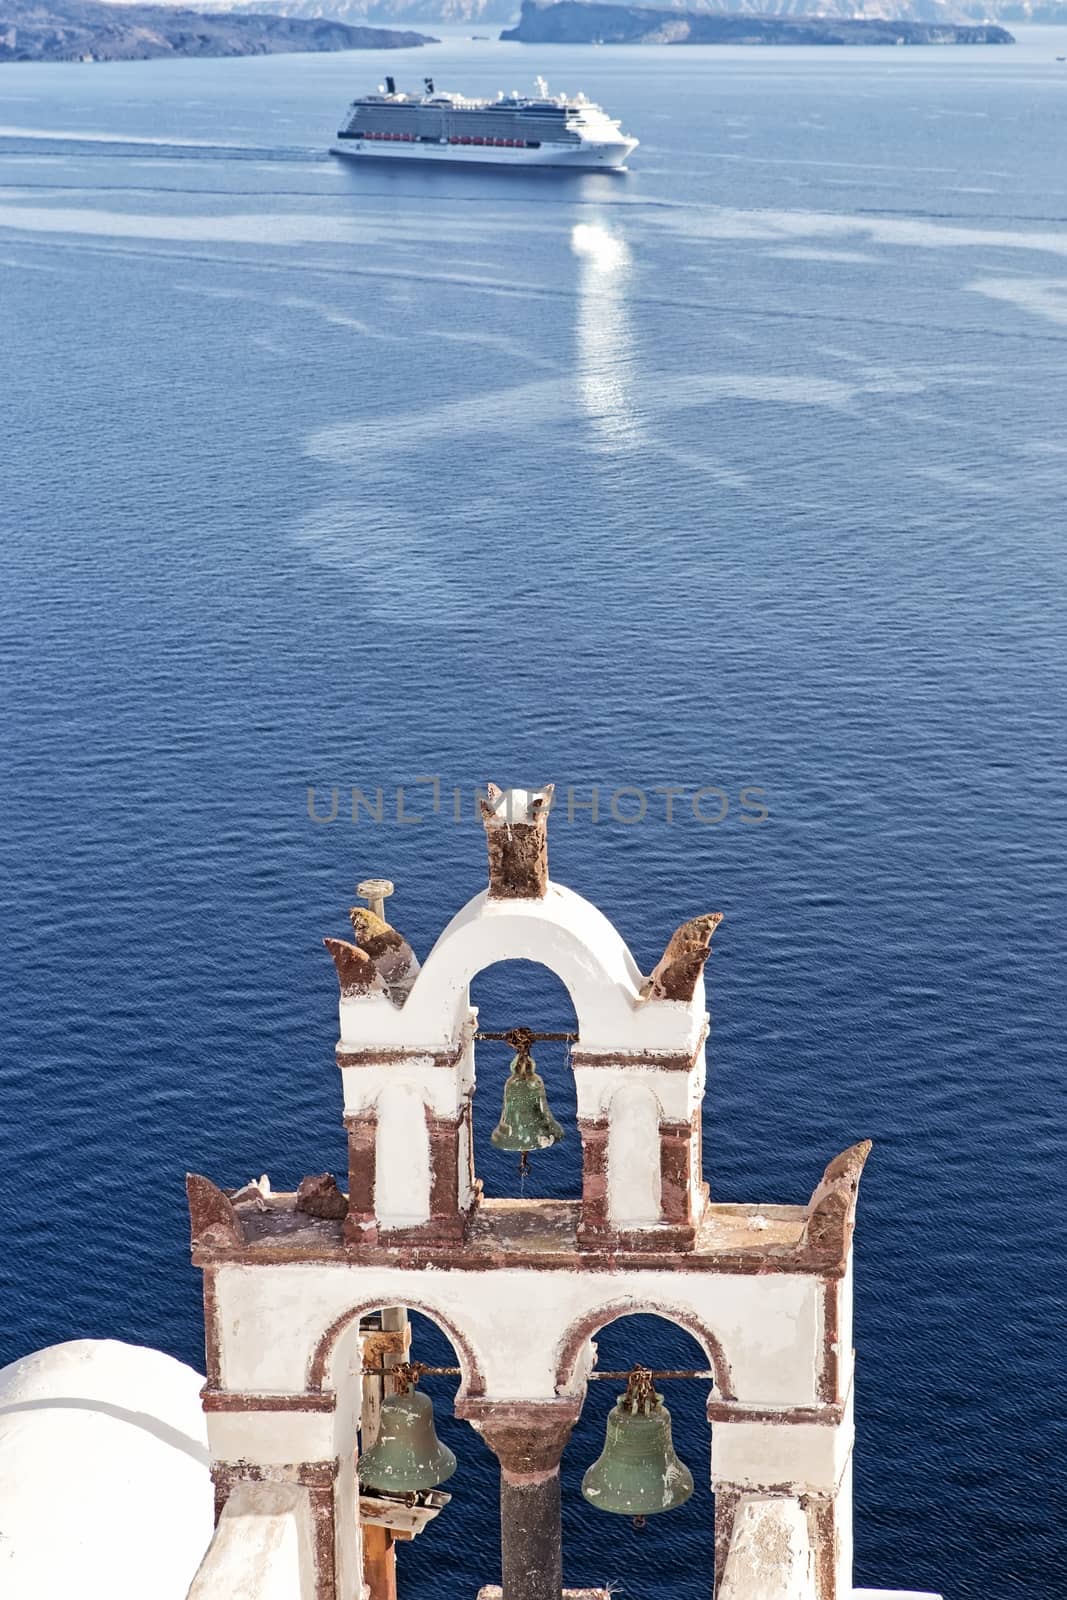 SANTORINI, GREECE: Vintage belfry in Oia, Santorini by mitakag